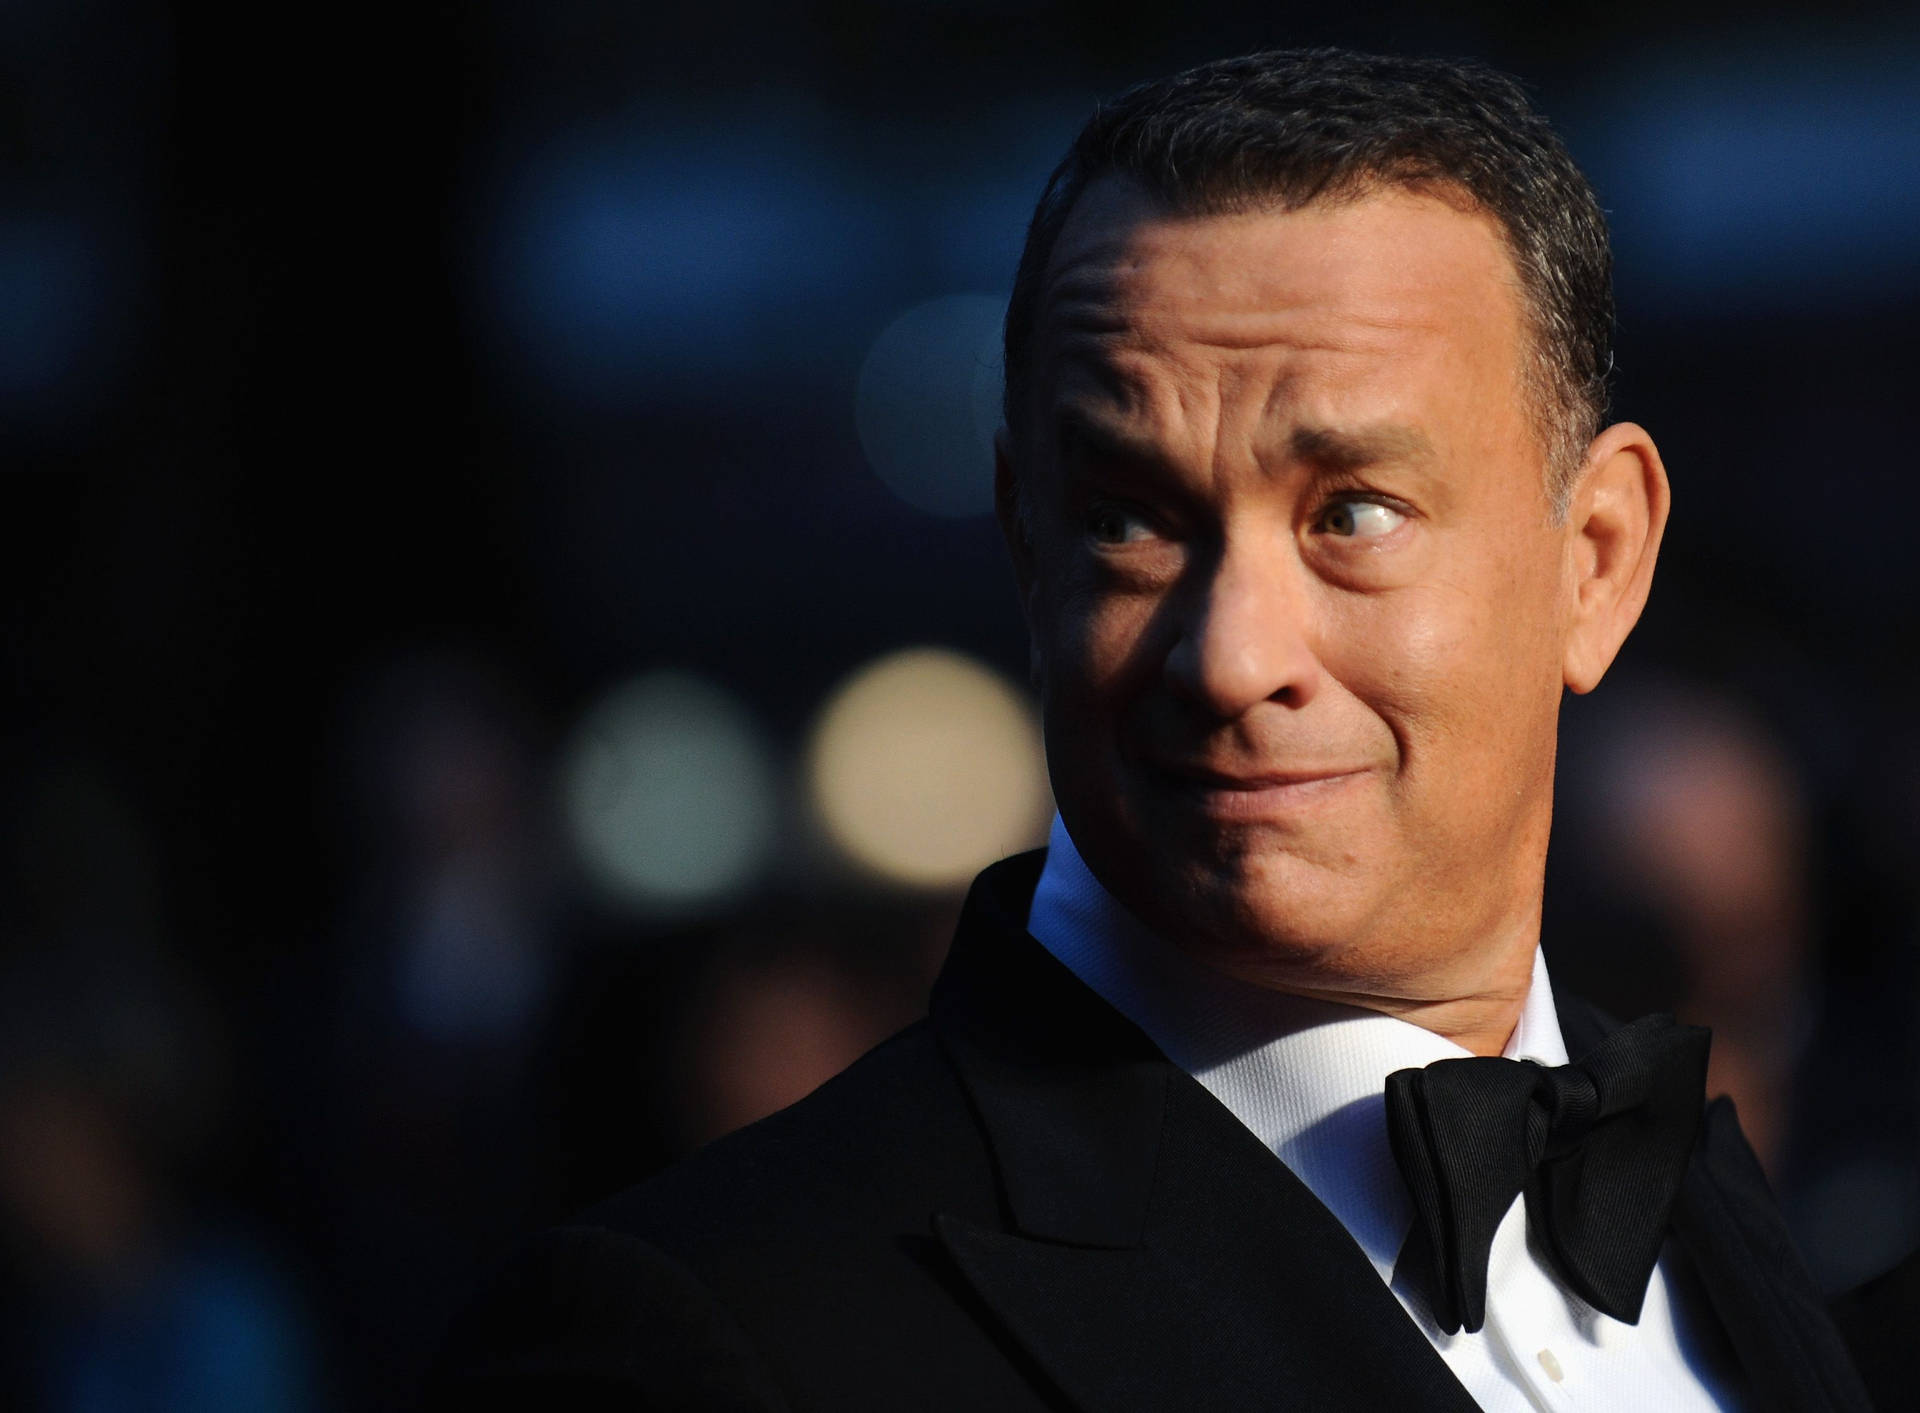 Tom Hanks Candid Photograph Background